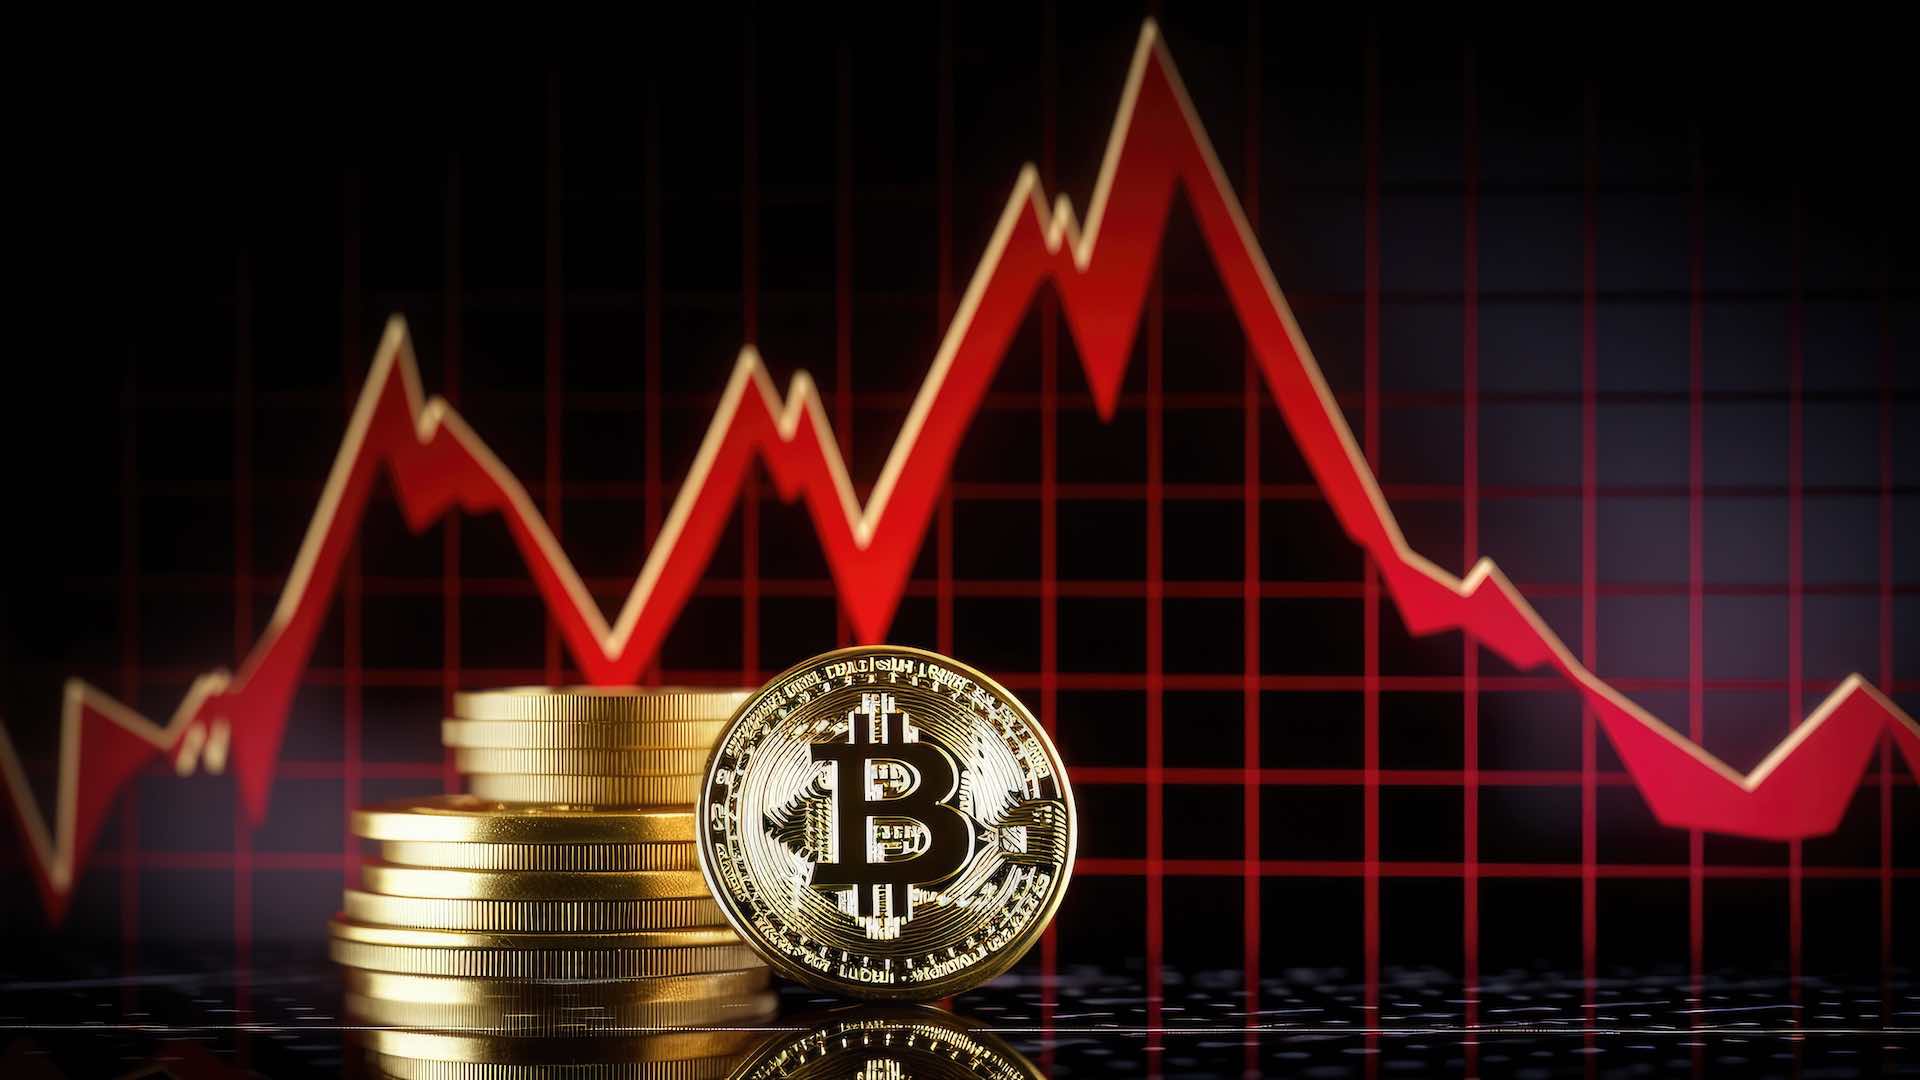 Bitcoin correction signals potential dip to $58,000, say experts